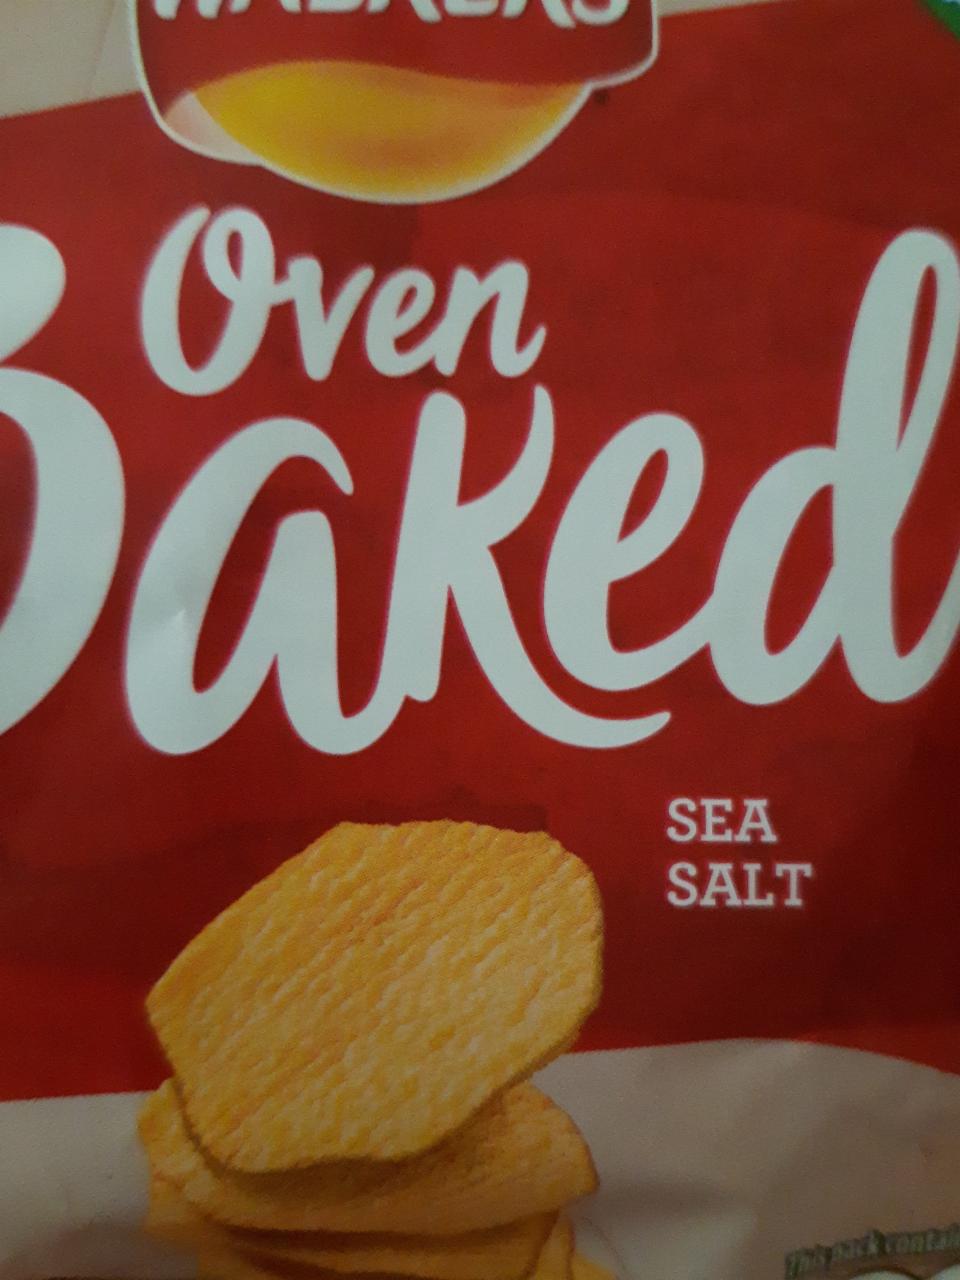 Fotografie - walkers oven baked sea salt 50 % less fat